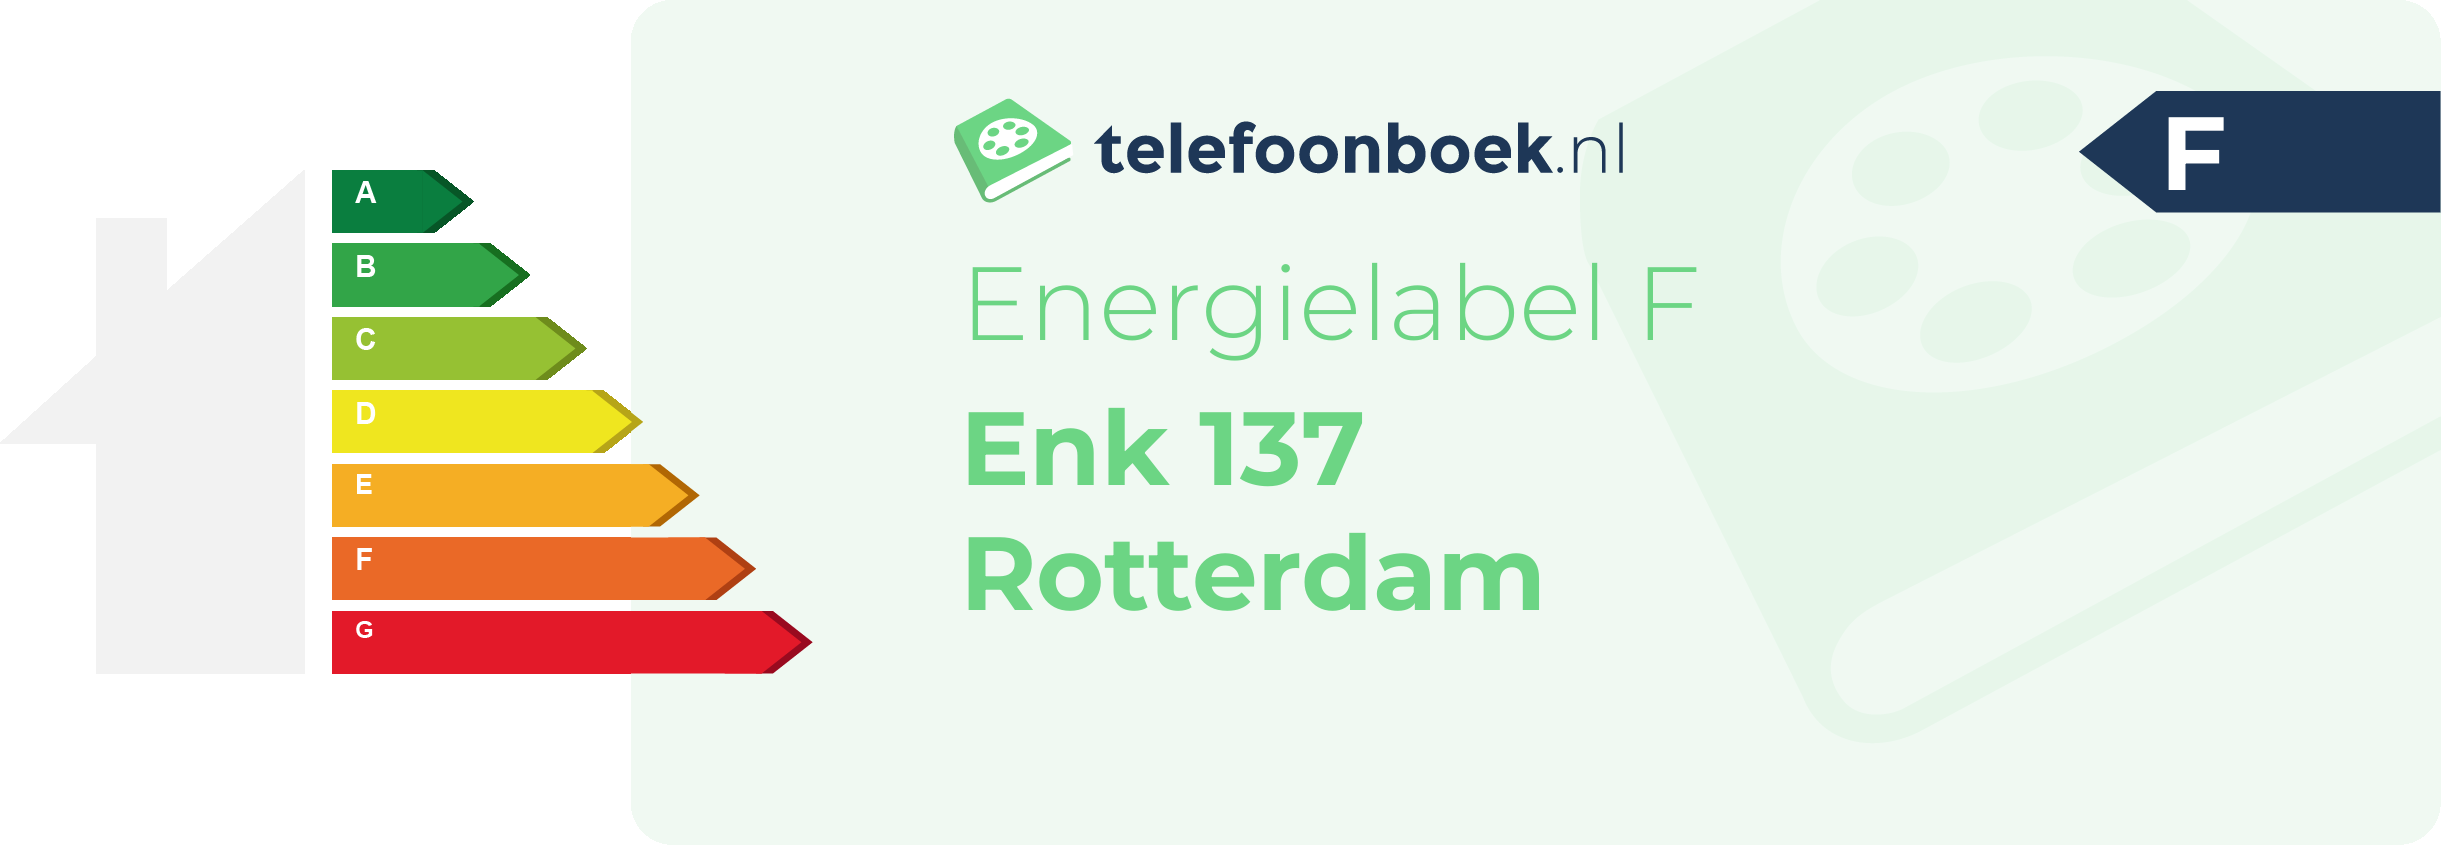 Energielabel Enk 137 Rotterdam